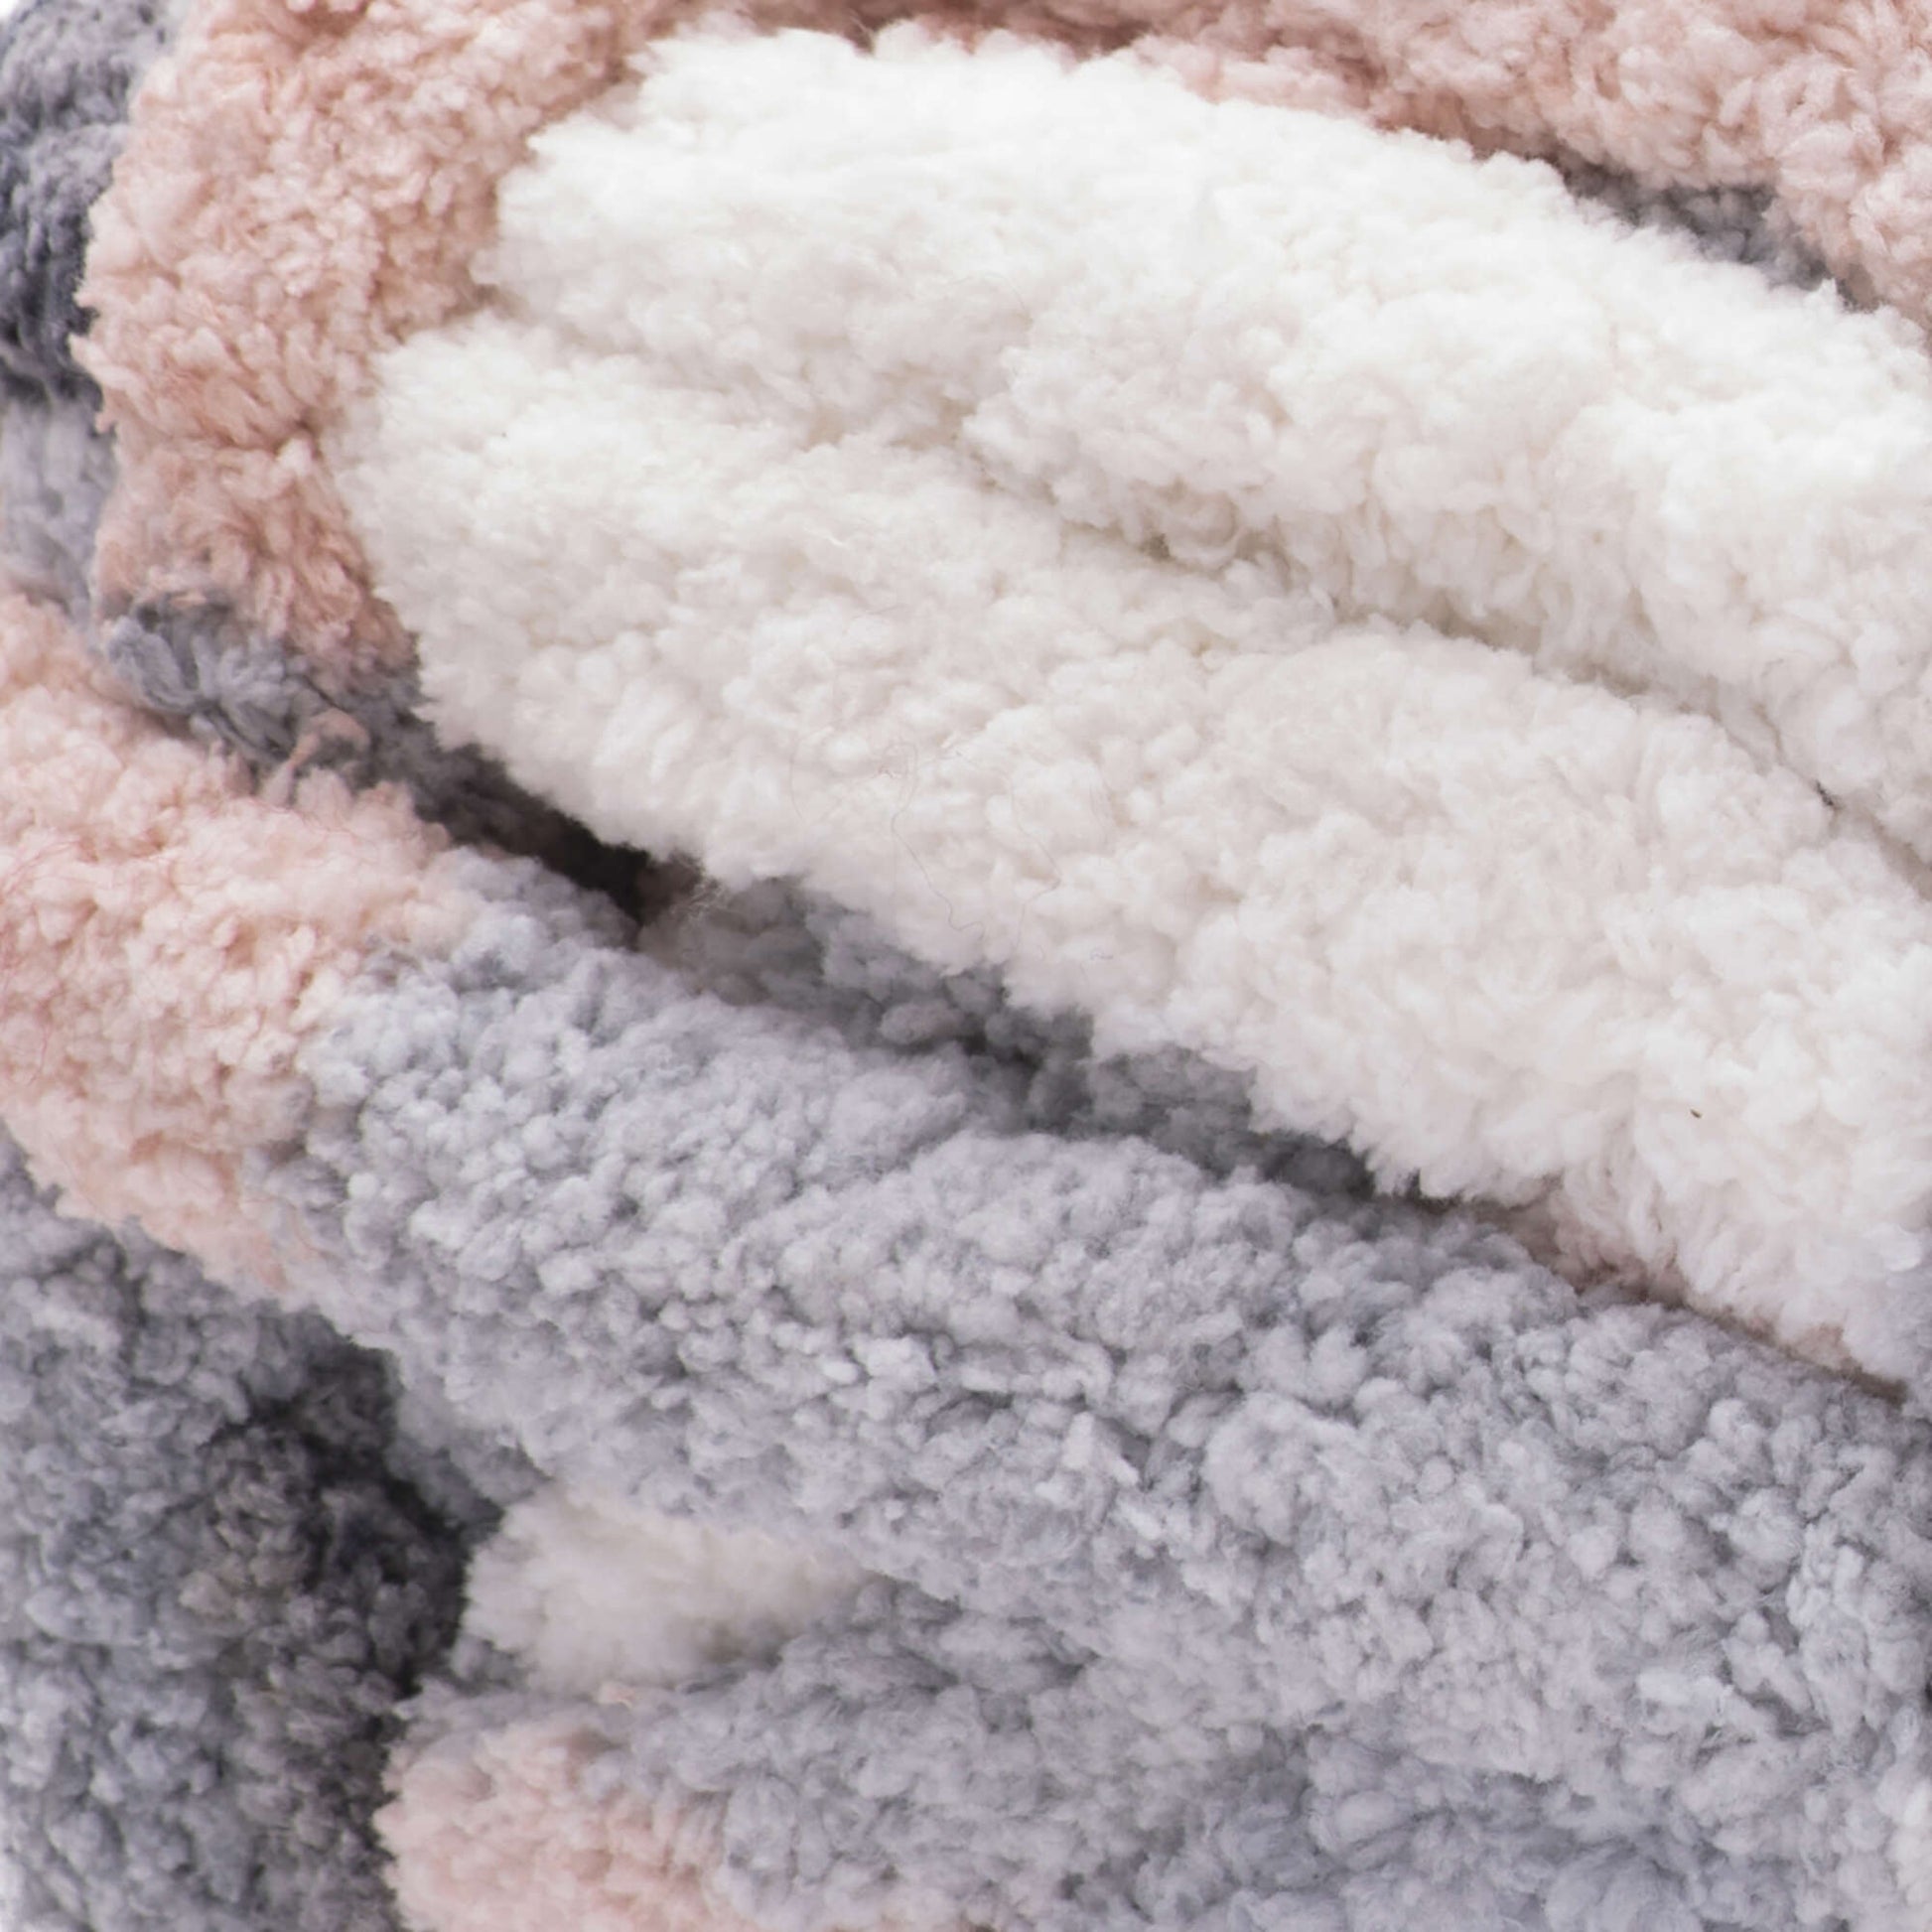 Bernat Blanket Big Yarn (300g/10.5oz) - Retailer Exclusive